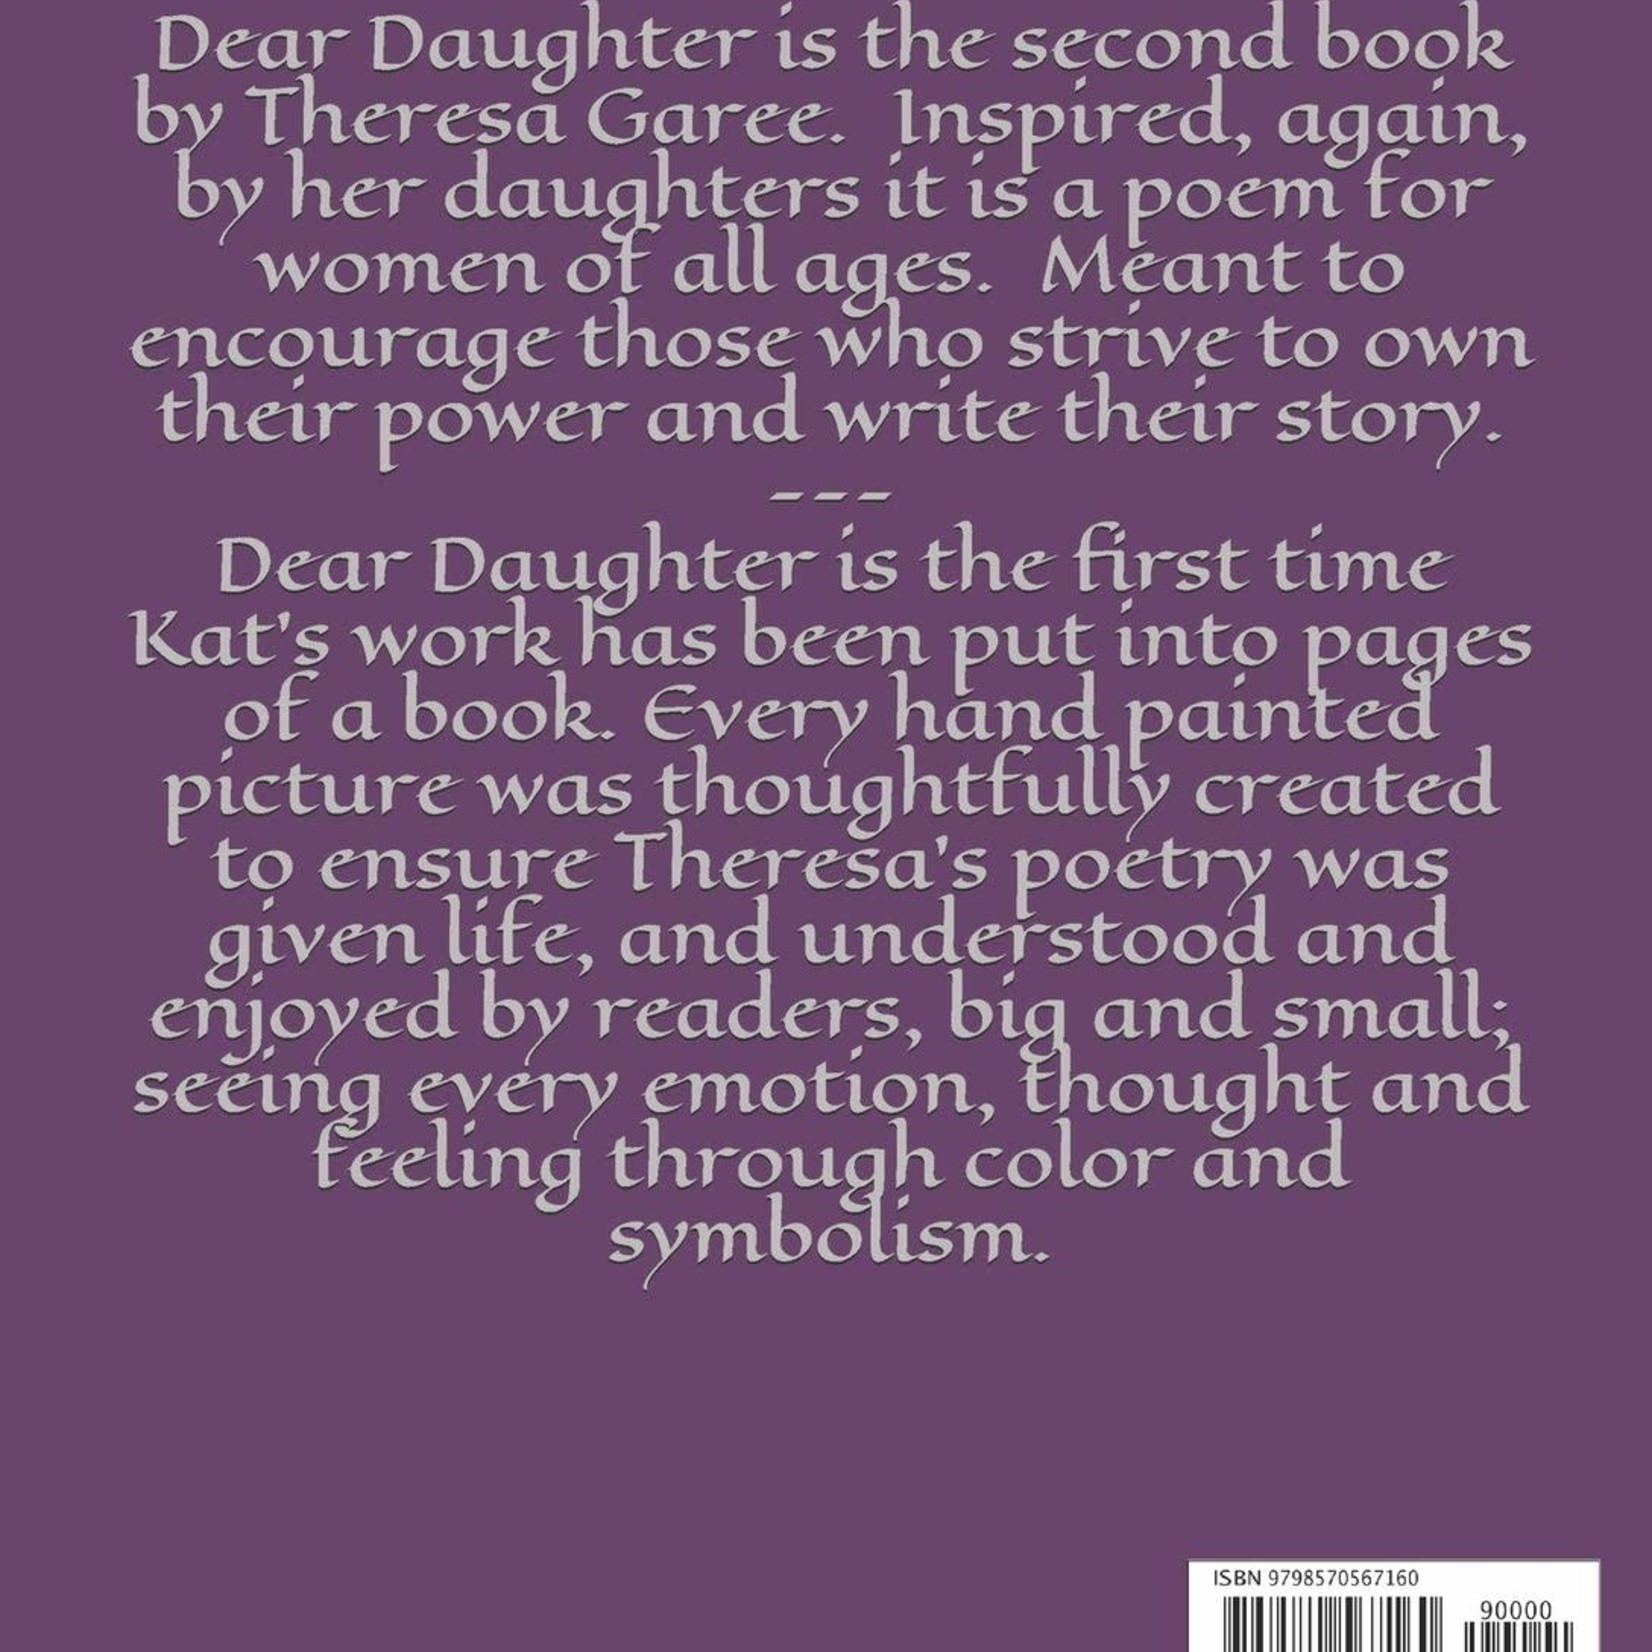 Dear Daughter by Theresa Garee [Signed + Artwork Bonus]